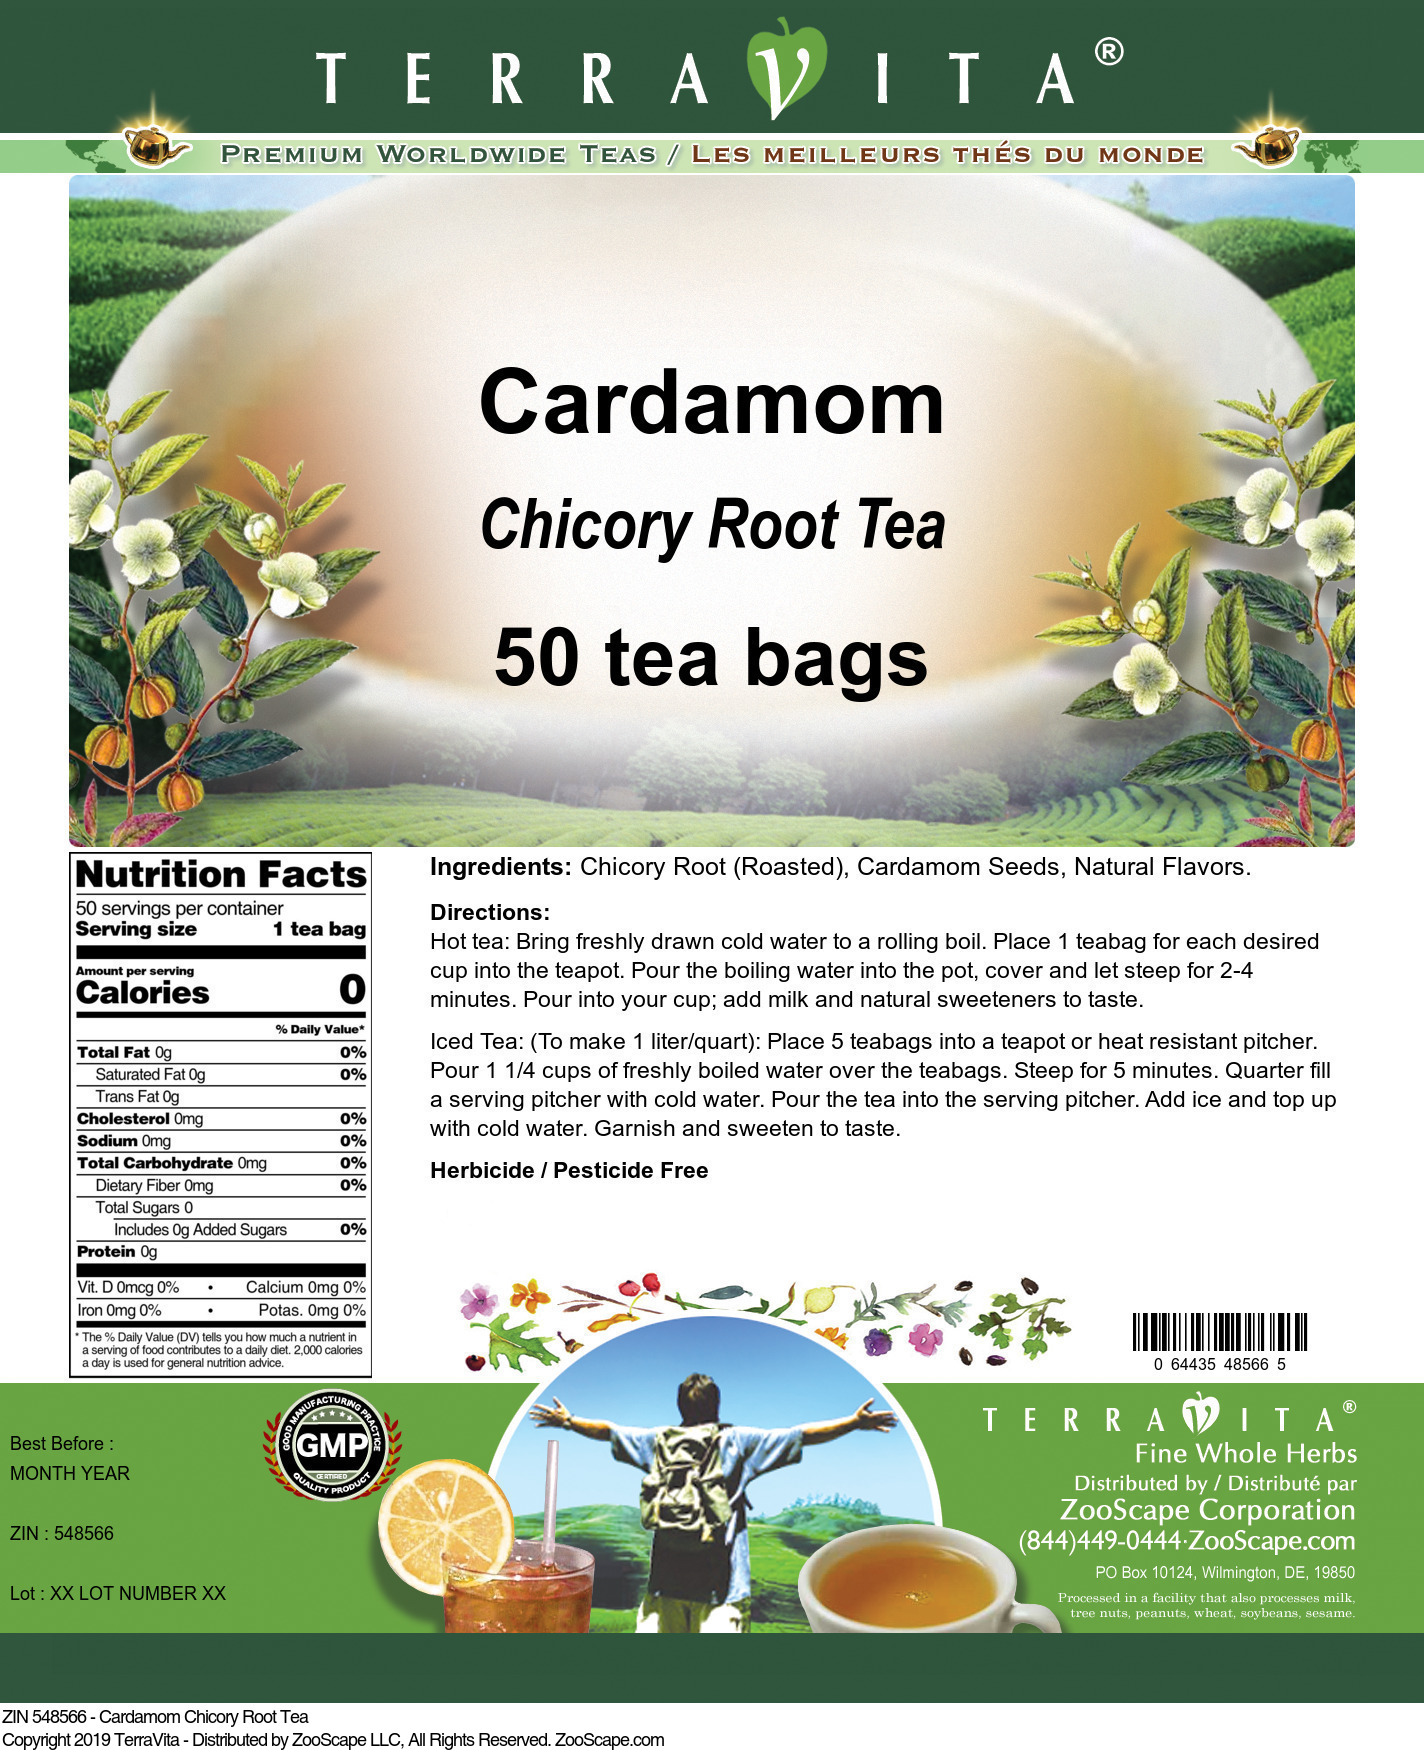 Cardamom Chicory Root Tea - Label